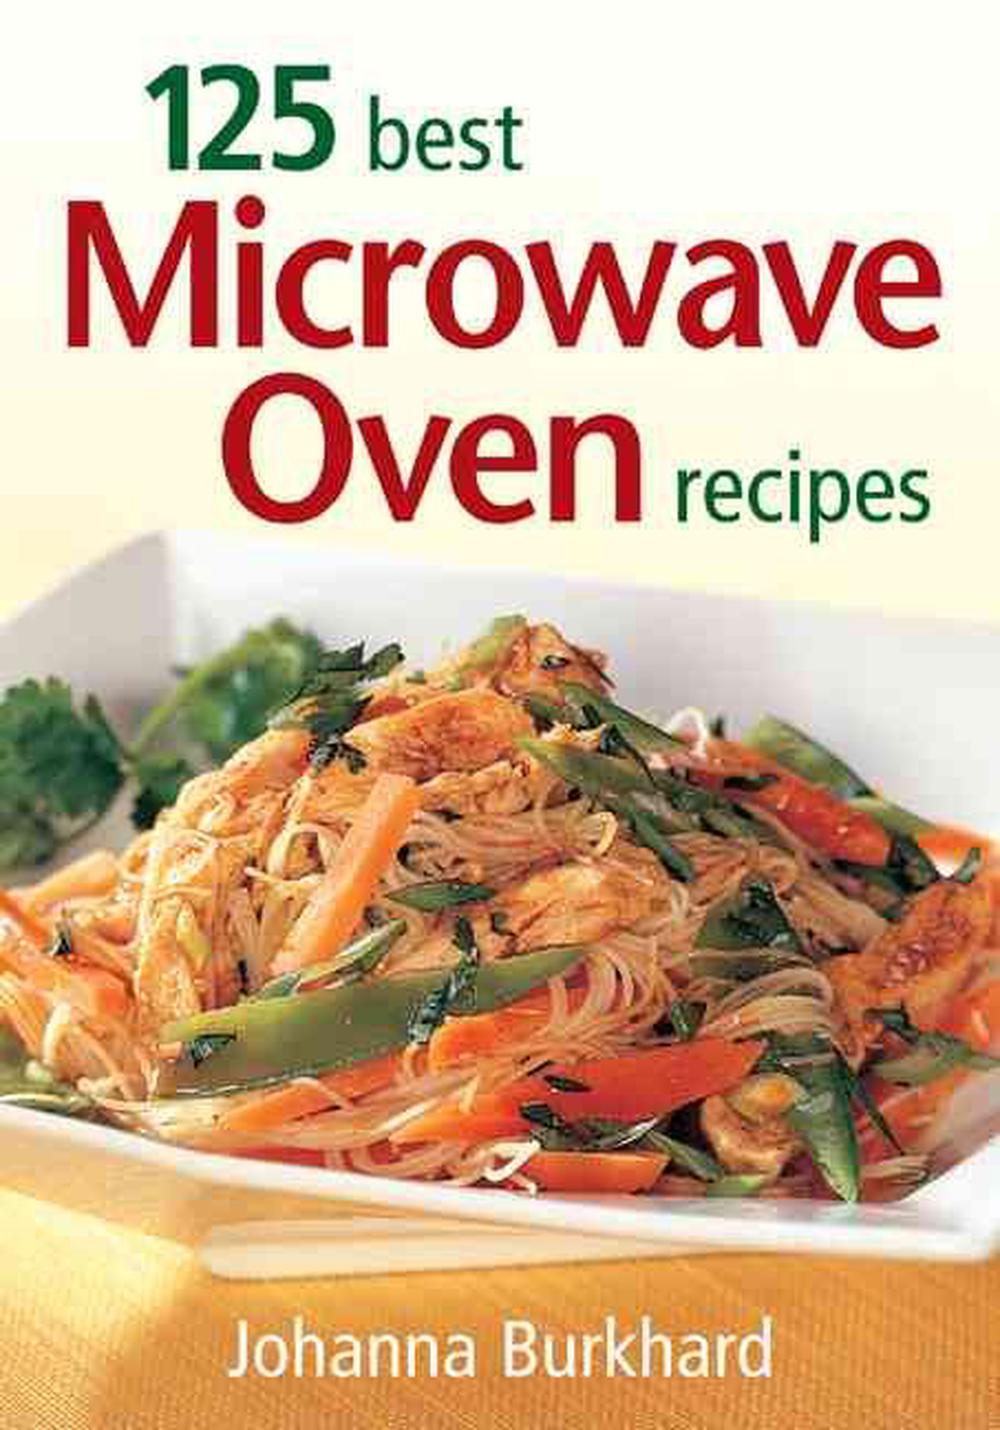 125 Best Microwave Oven Recipes by Johanna Burkhard (English) Paperback